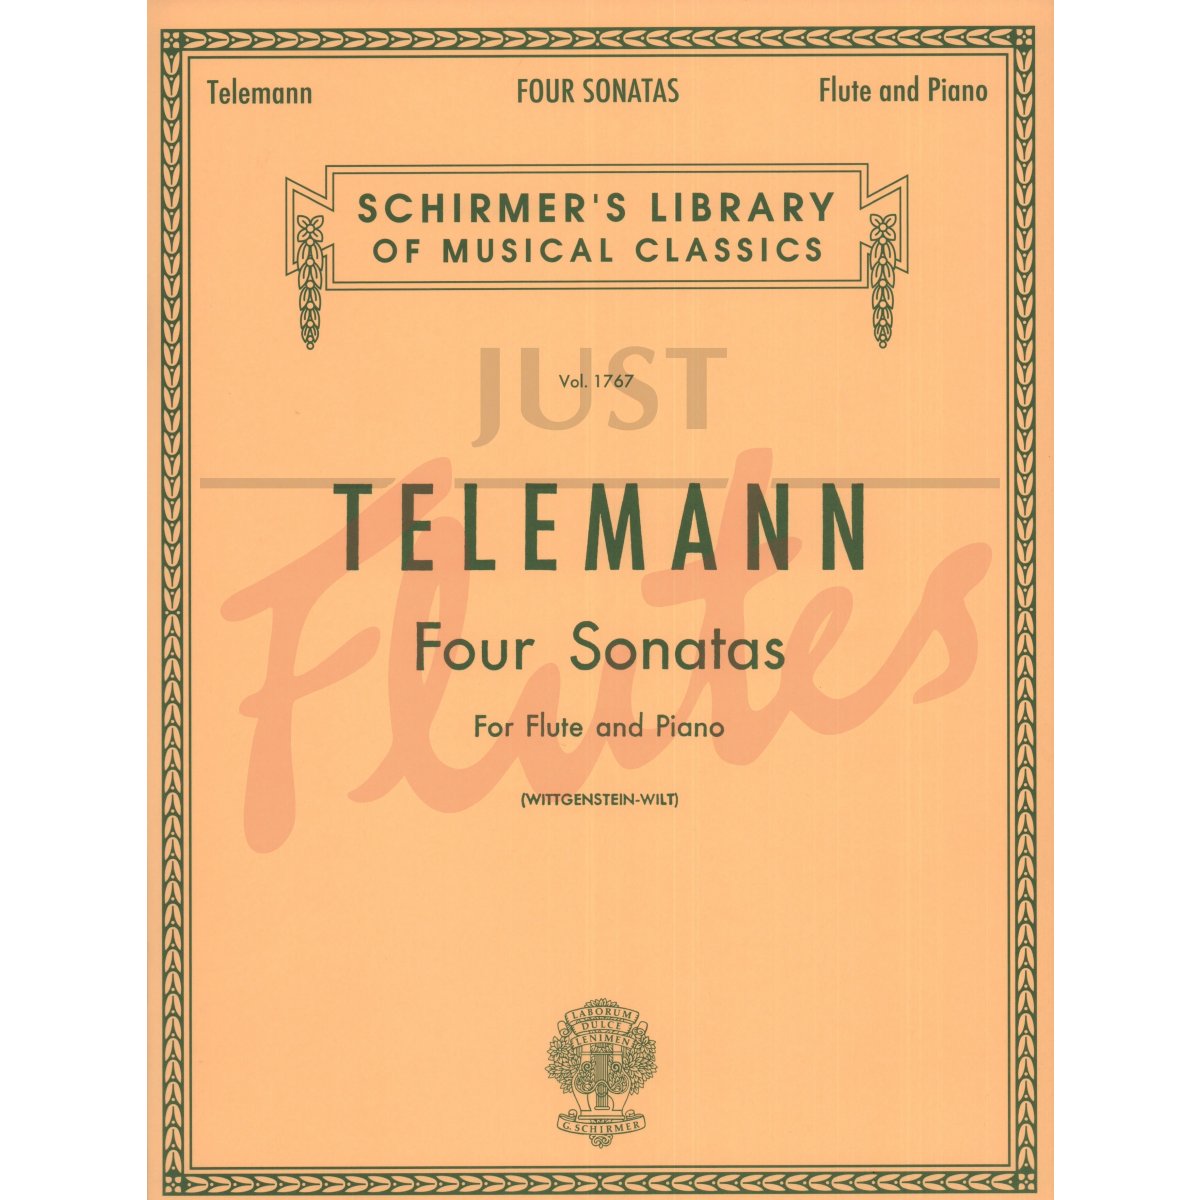 Four Sonatas for Flute and Piano